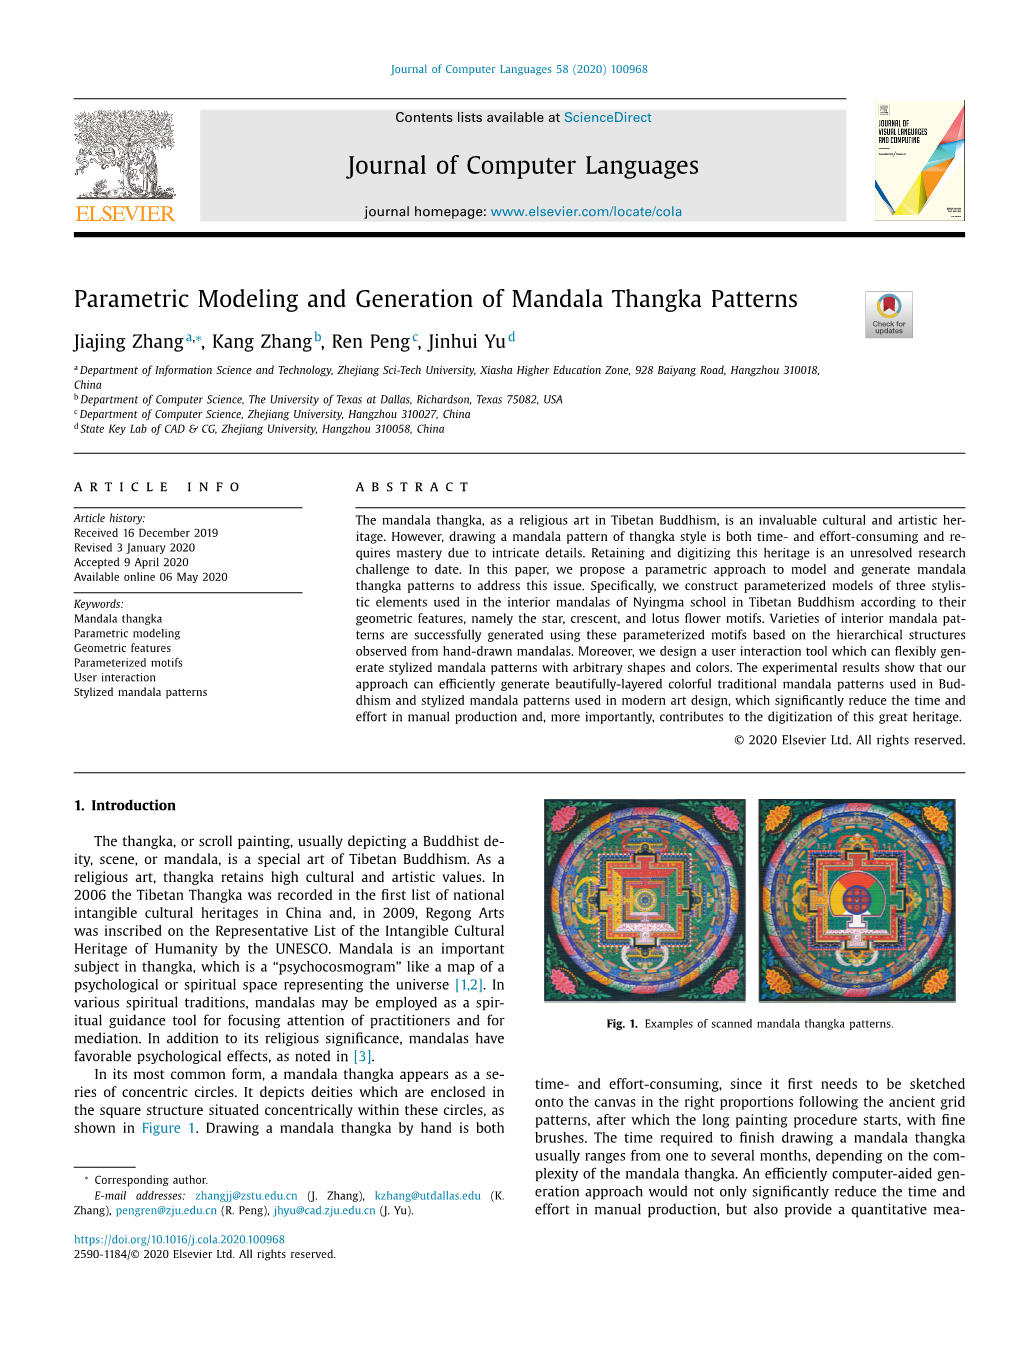 Parametric Modeling and Generation of Mandala Thangka Patterns